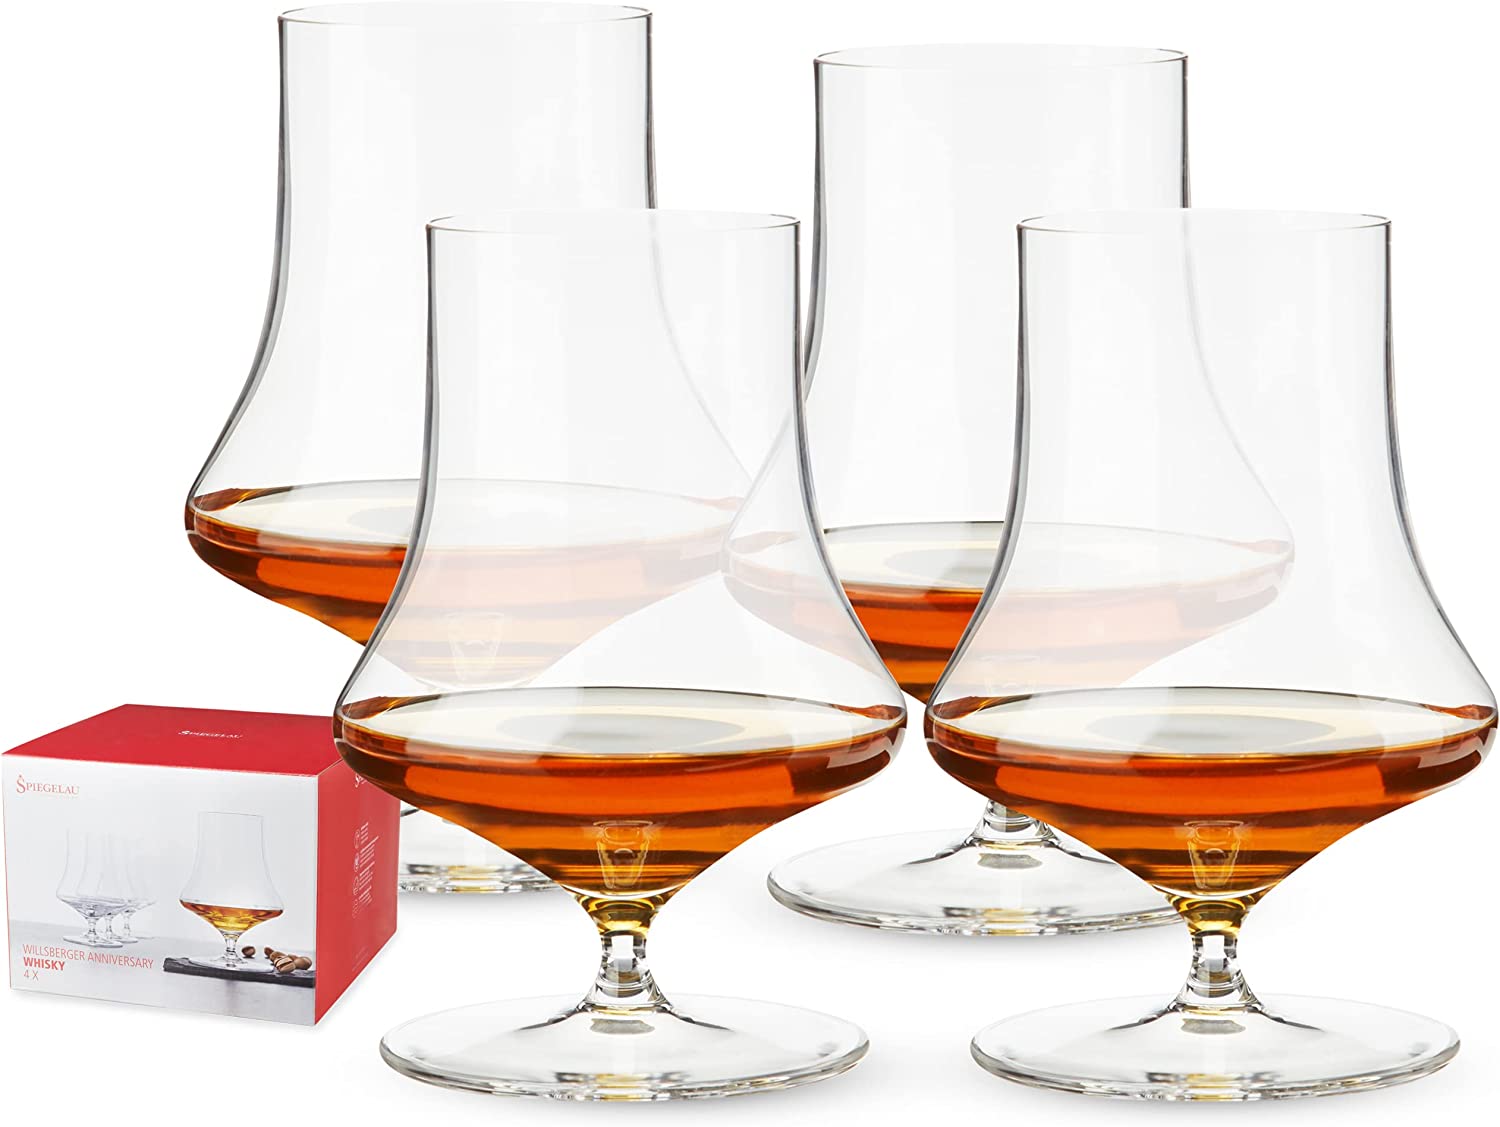 Spiegelau & Nachtmann Spiegelau Willsberger Whiskey Glasses, Set of 4, European Made Lead Free Crystal Modern Cocktail Glasses, Dishwasher Safe, Professional Quality, Cocktail Gift Set, 12 oz